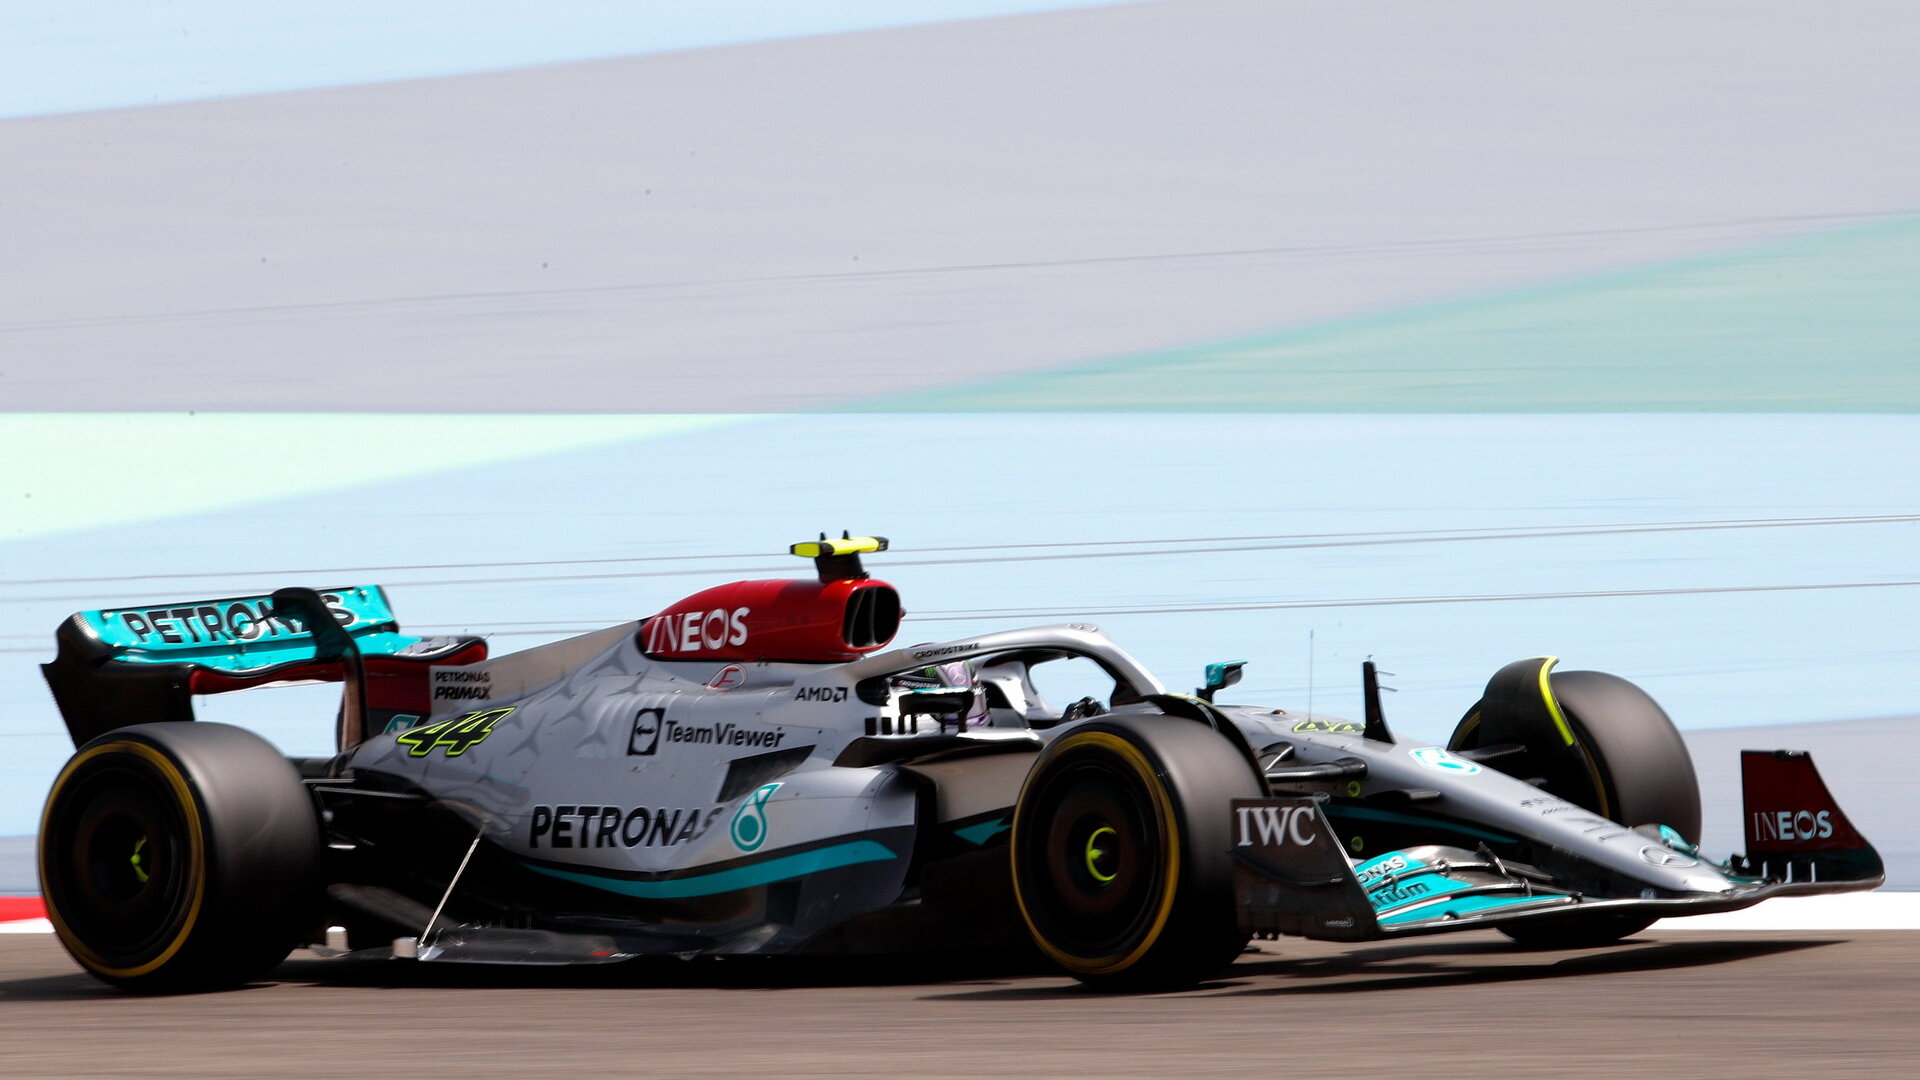 Lewis Hamilton s novým Mercedesem W13 během 1. den testů v Bahrajnu